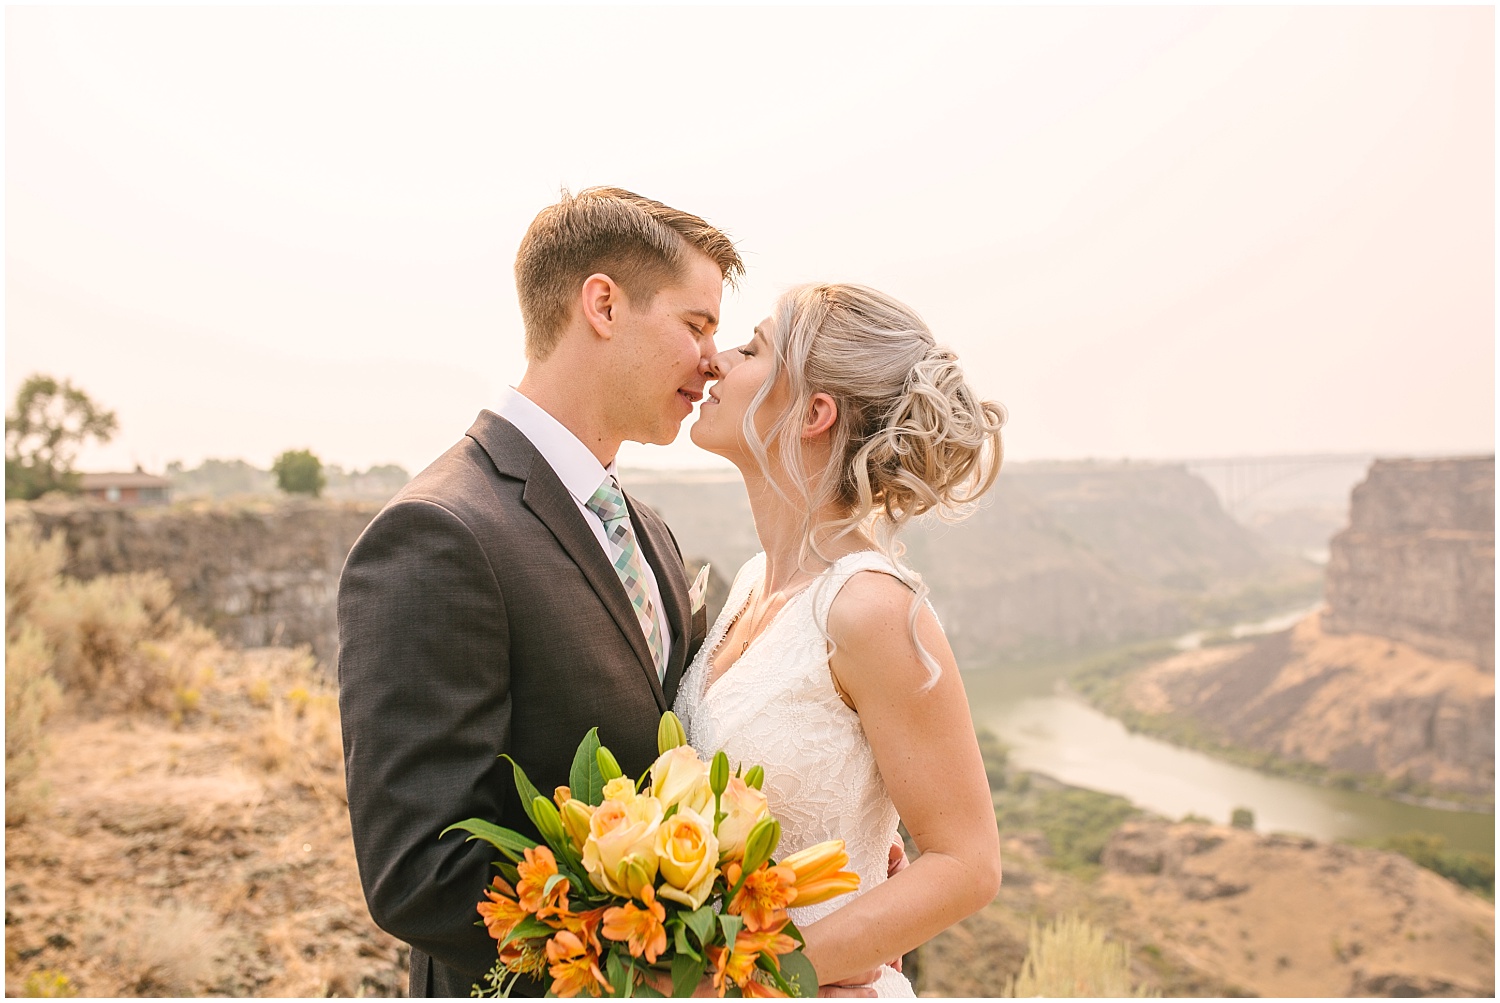 Twin Falls Idaho wedding photos overlooking Snake River Canyon